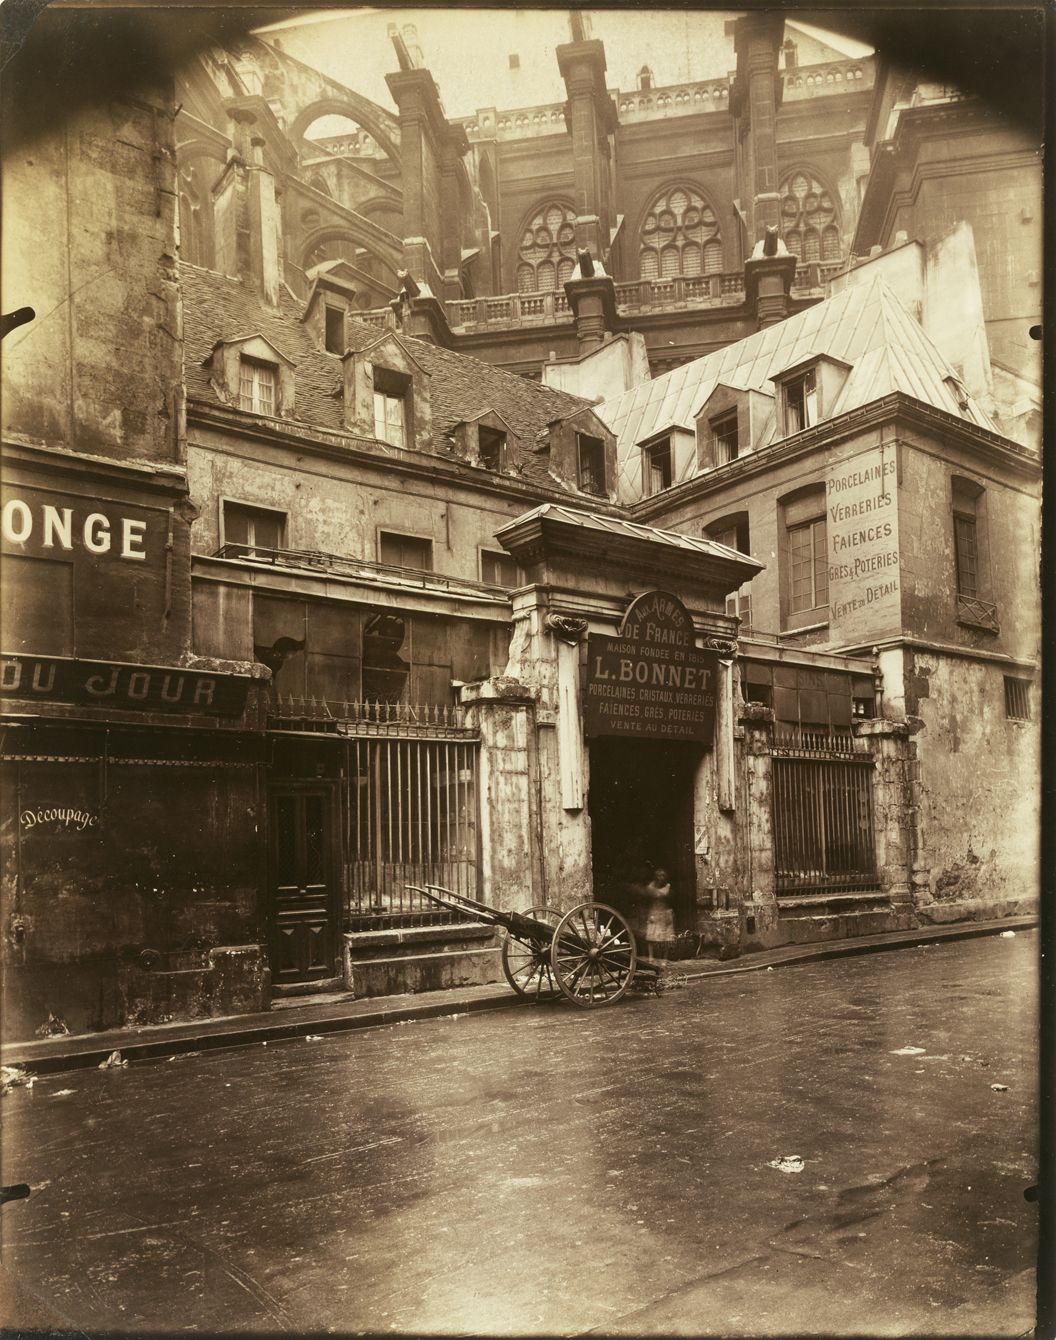 Rue du Jour, Paris, 1925 - Eugène Atget.jpg